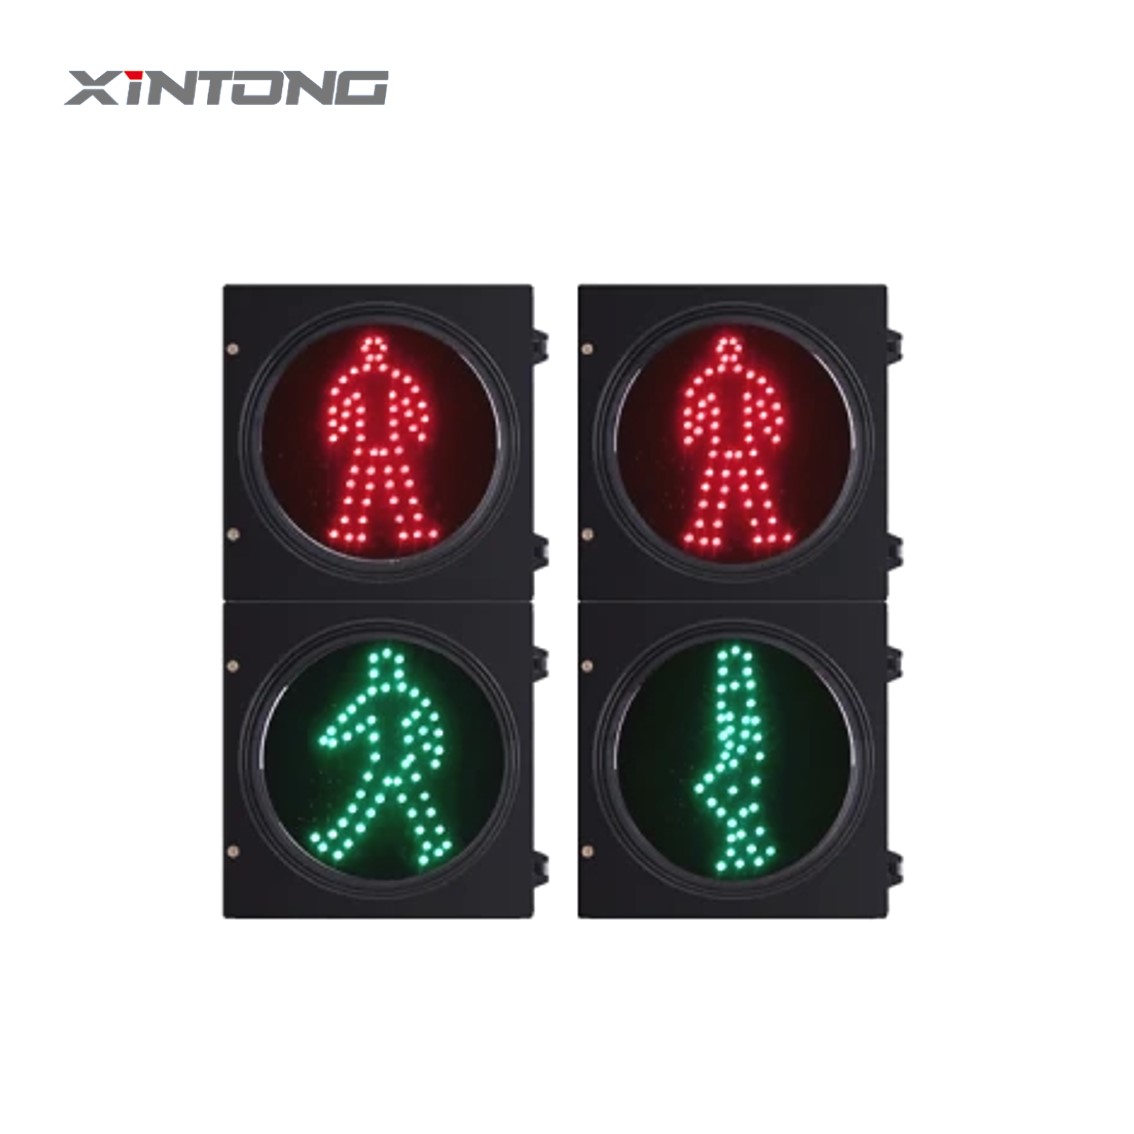 Smart Traffic Light Control System for Efficient Traffic Management